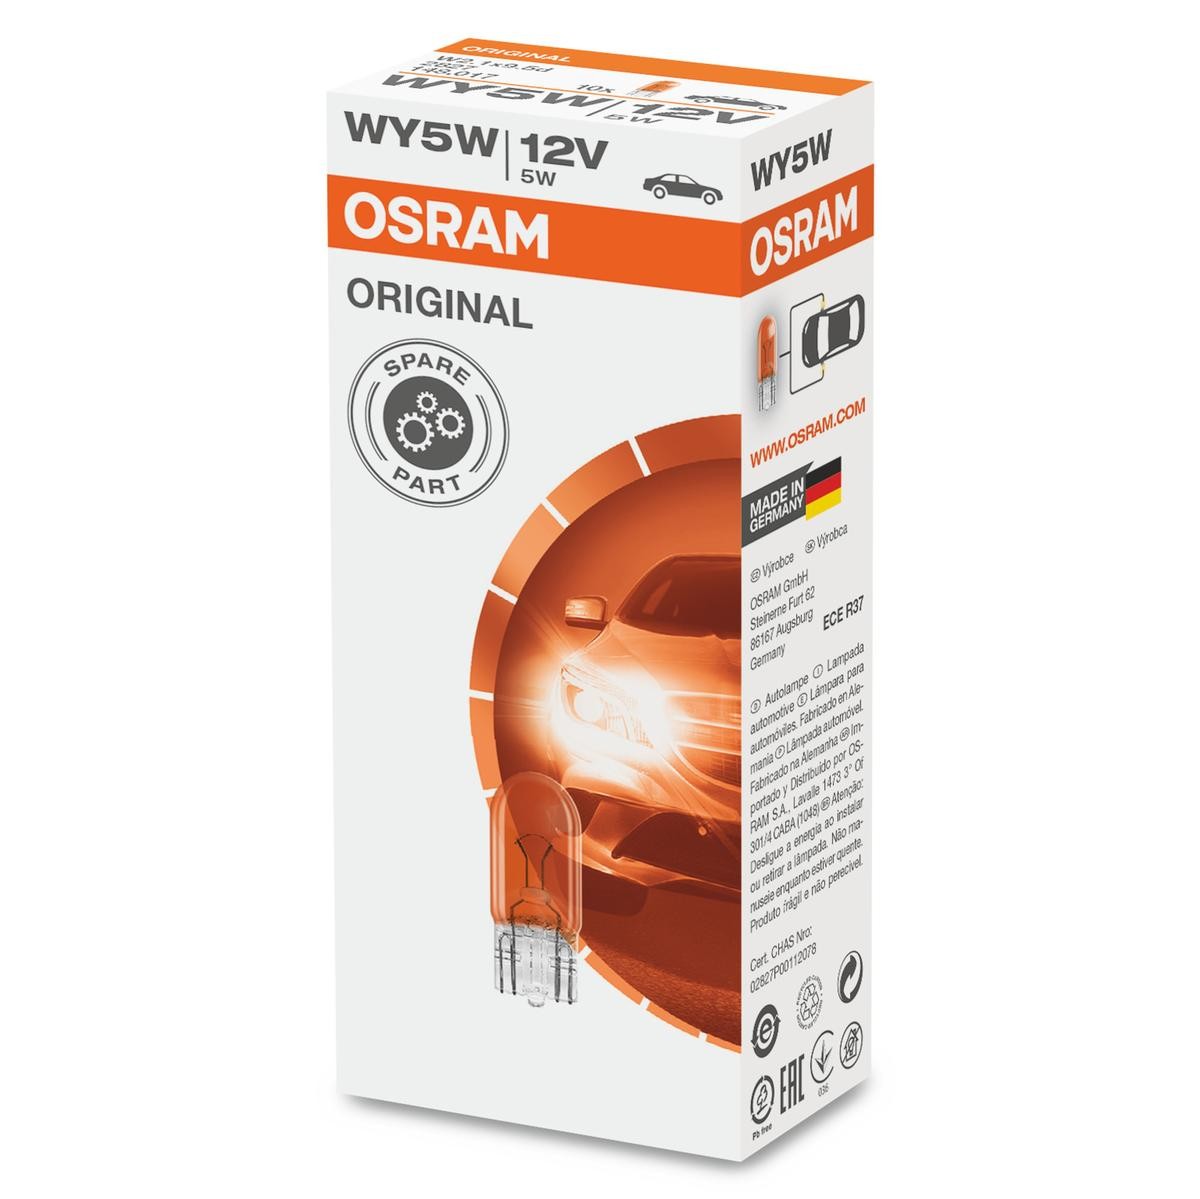 OSRAM 2827 Blinker Lampe 12V 5W, WY5W Audi in Original Qualität